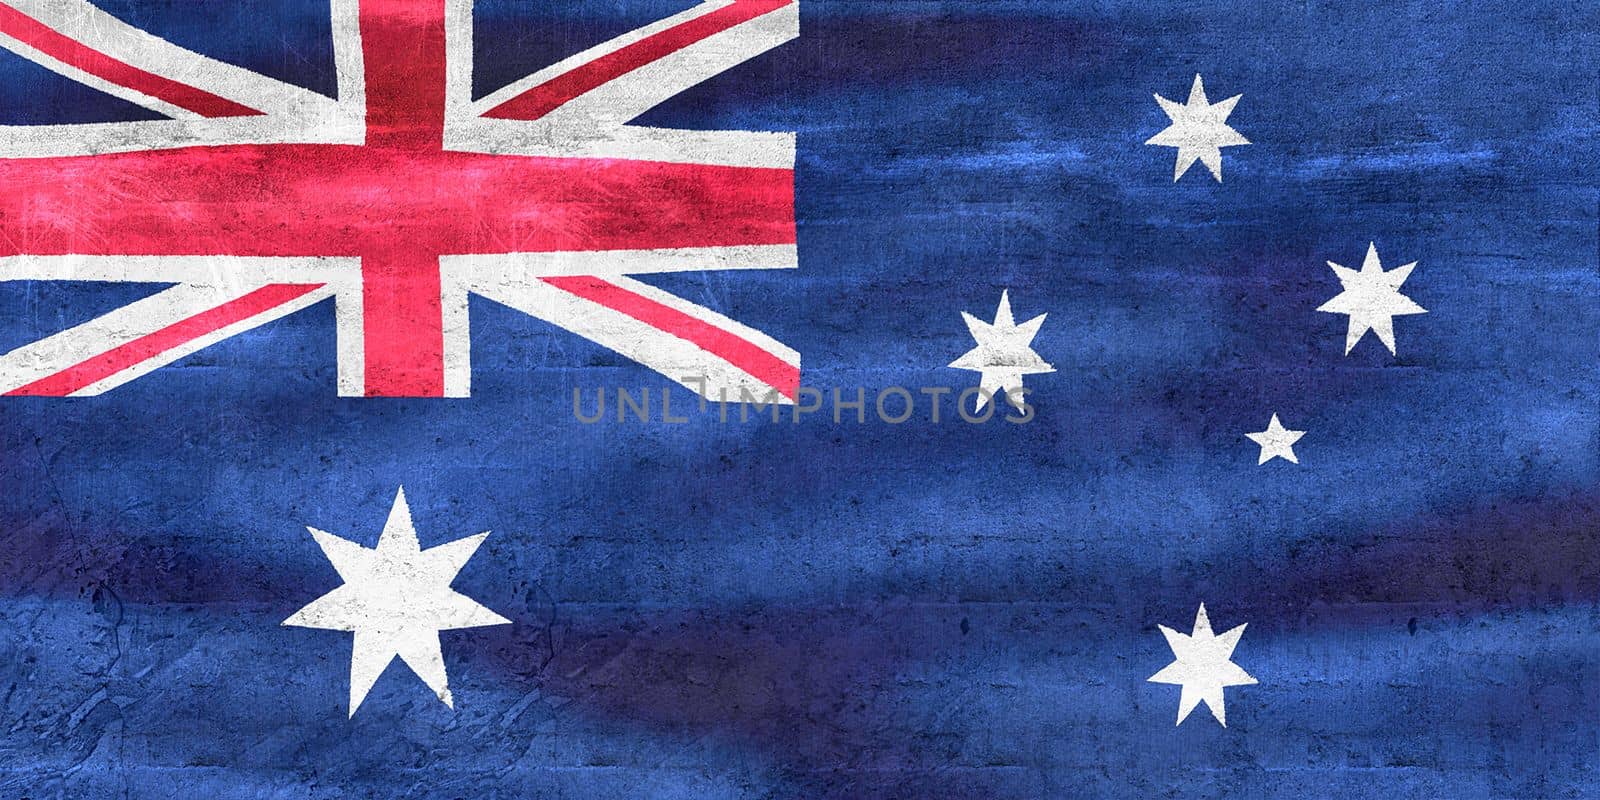 Australia flag - realistic waving fabric flag by MP_foto71